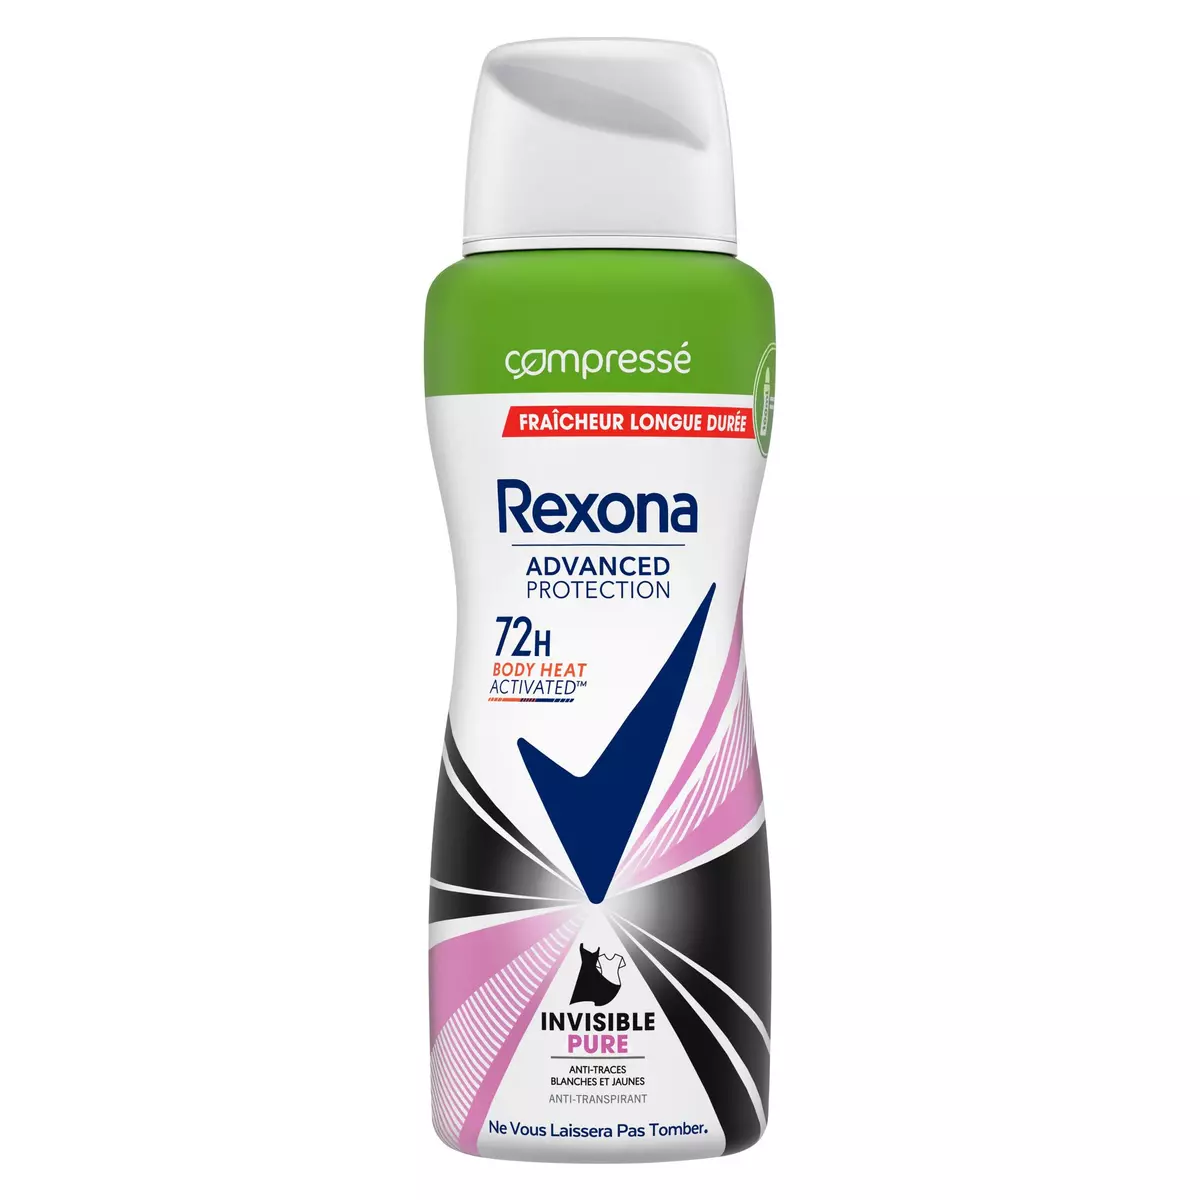 REXONA Advanced protection déodorant spray anti-traces & anti-transpirant 72h 0% alcool 100ml